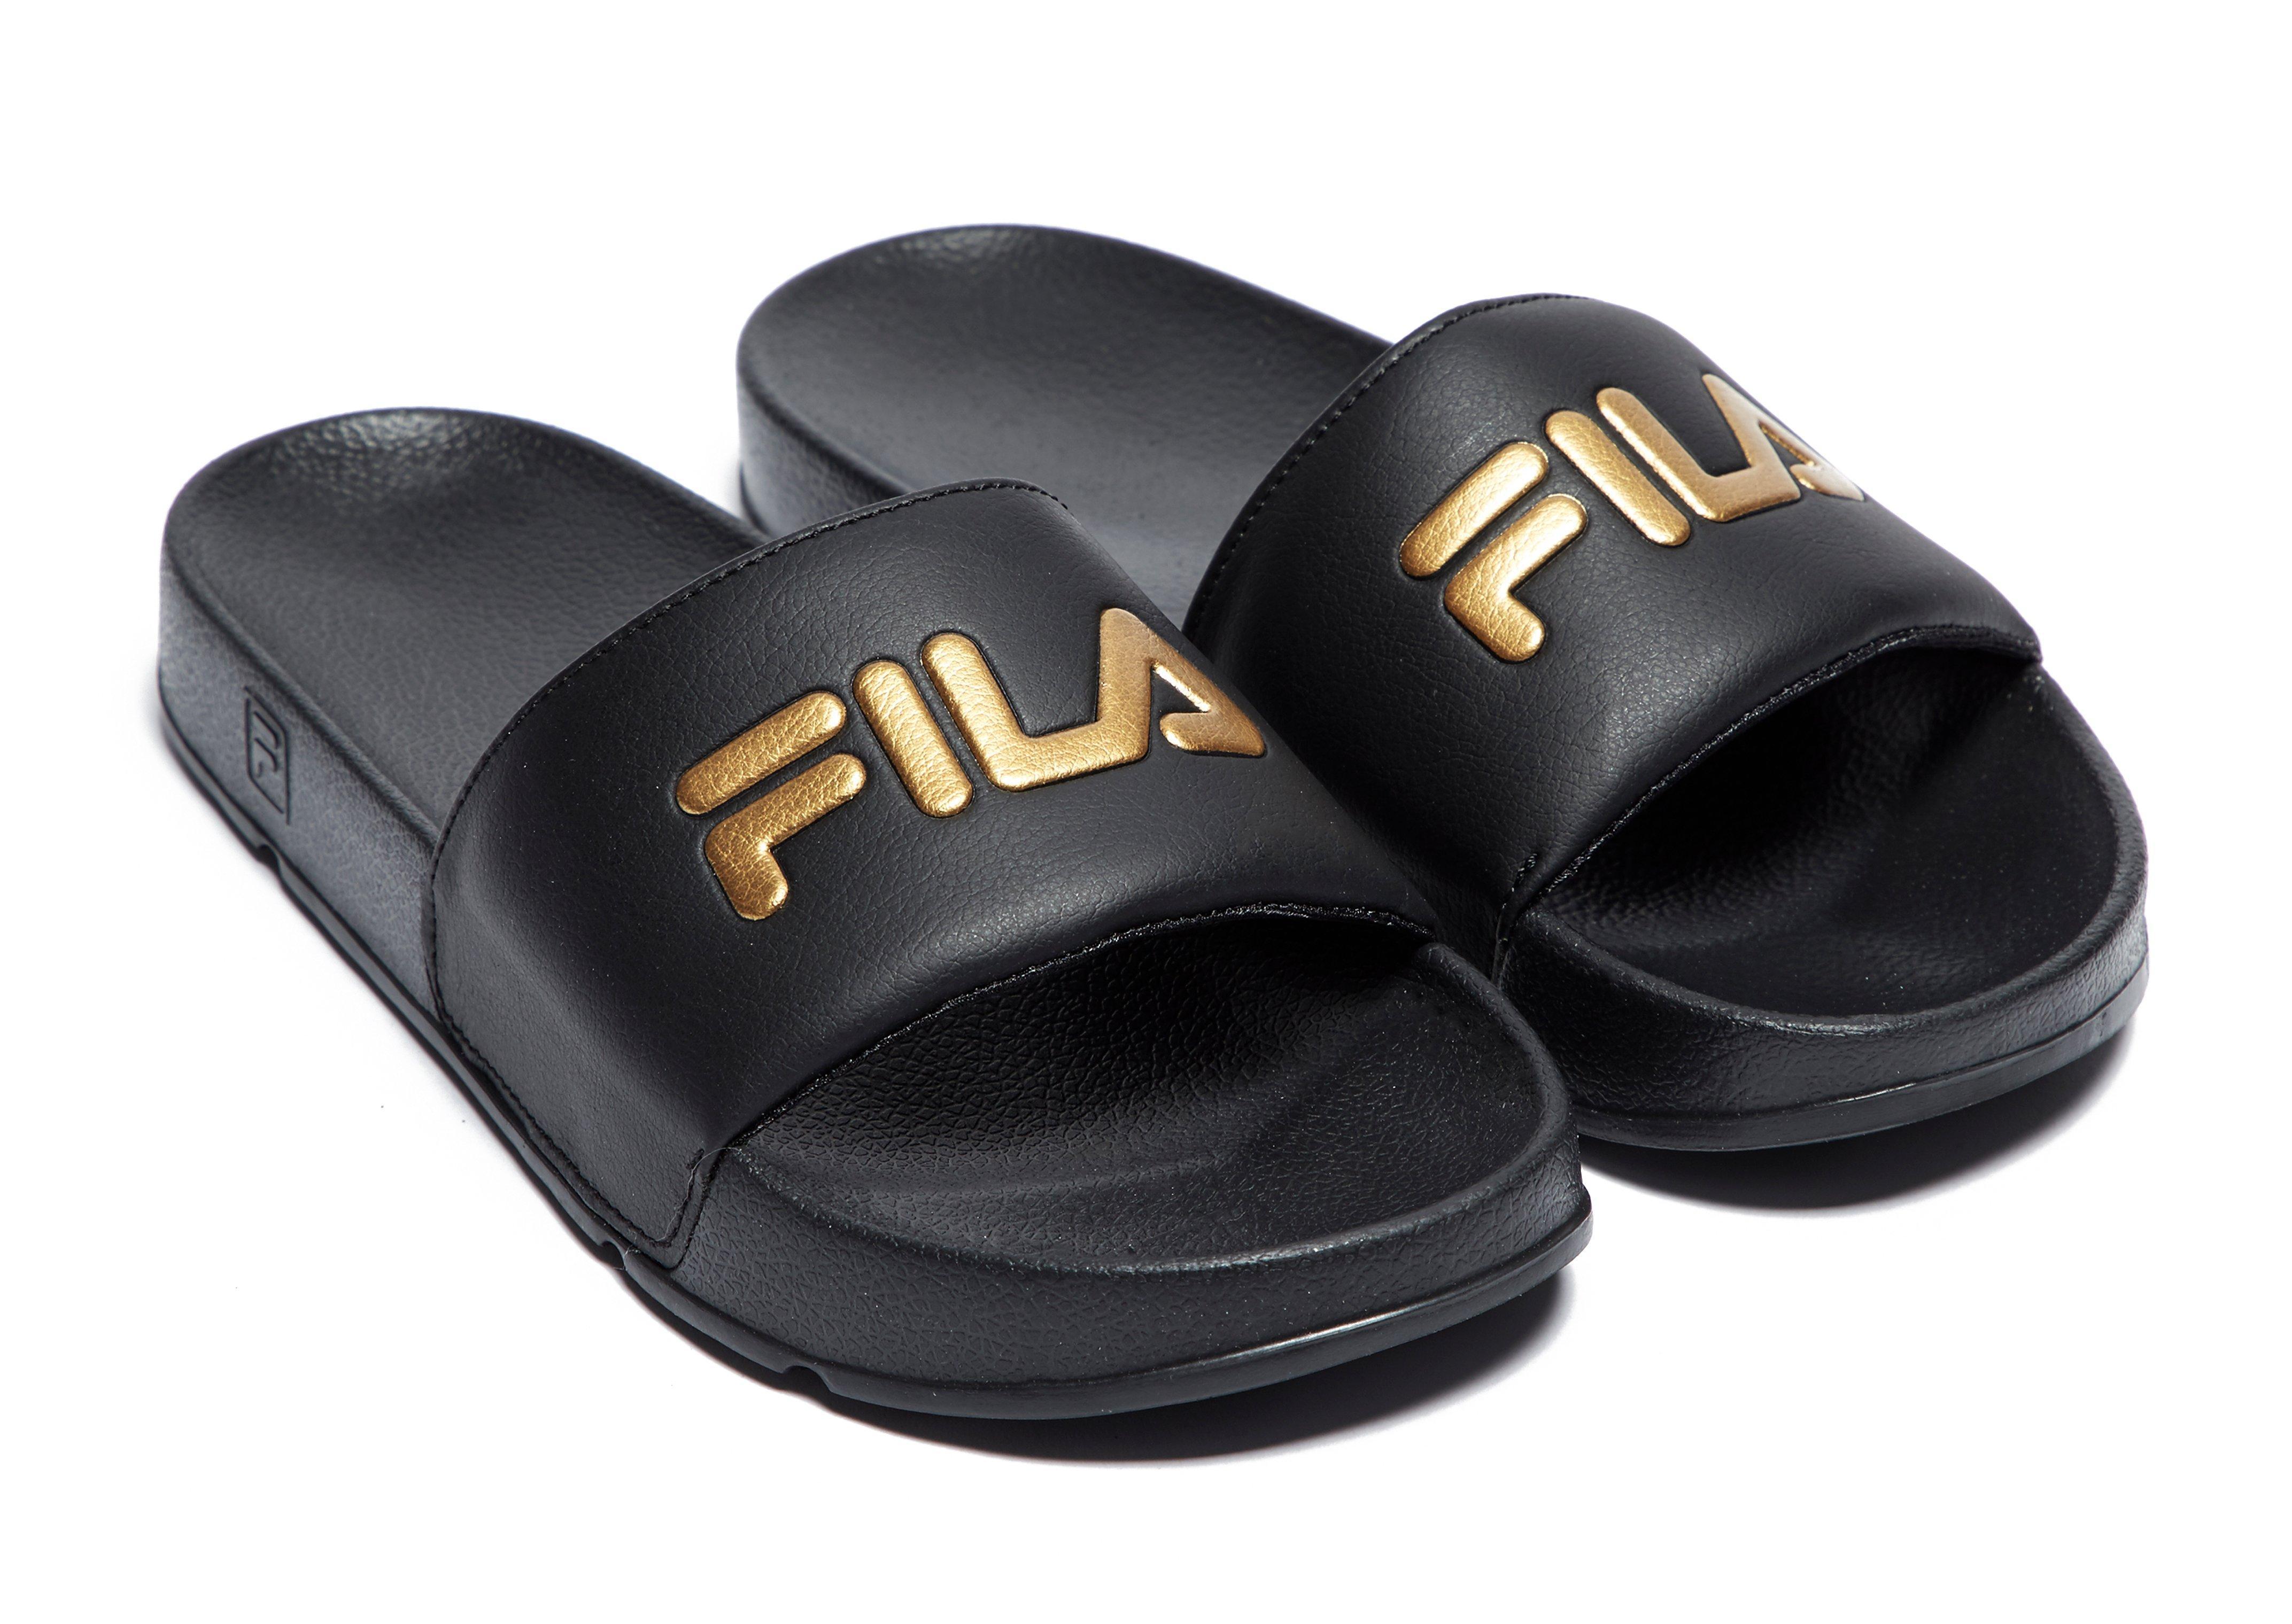 fila sandals online